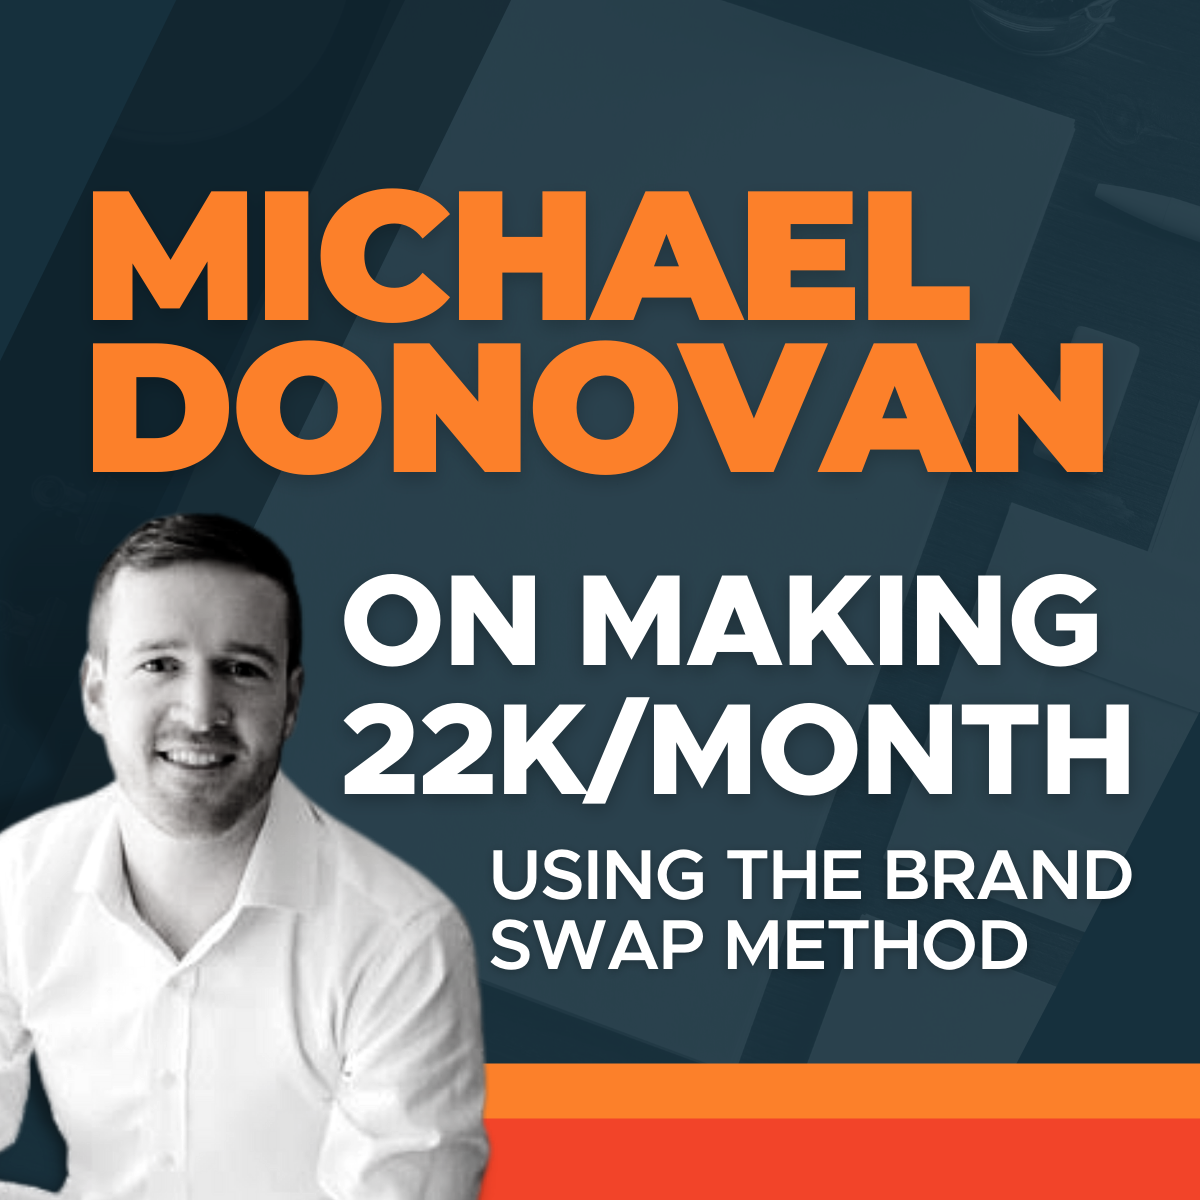 Michael Donovan on making 22k/month using the brand swap method